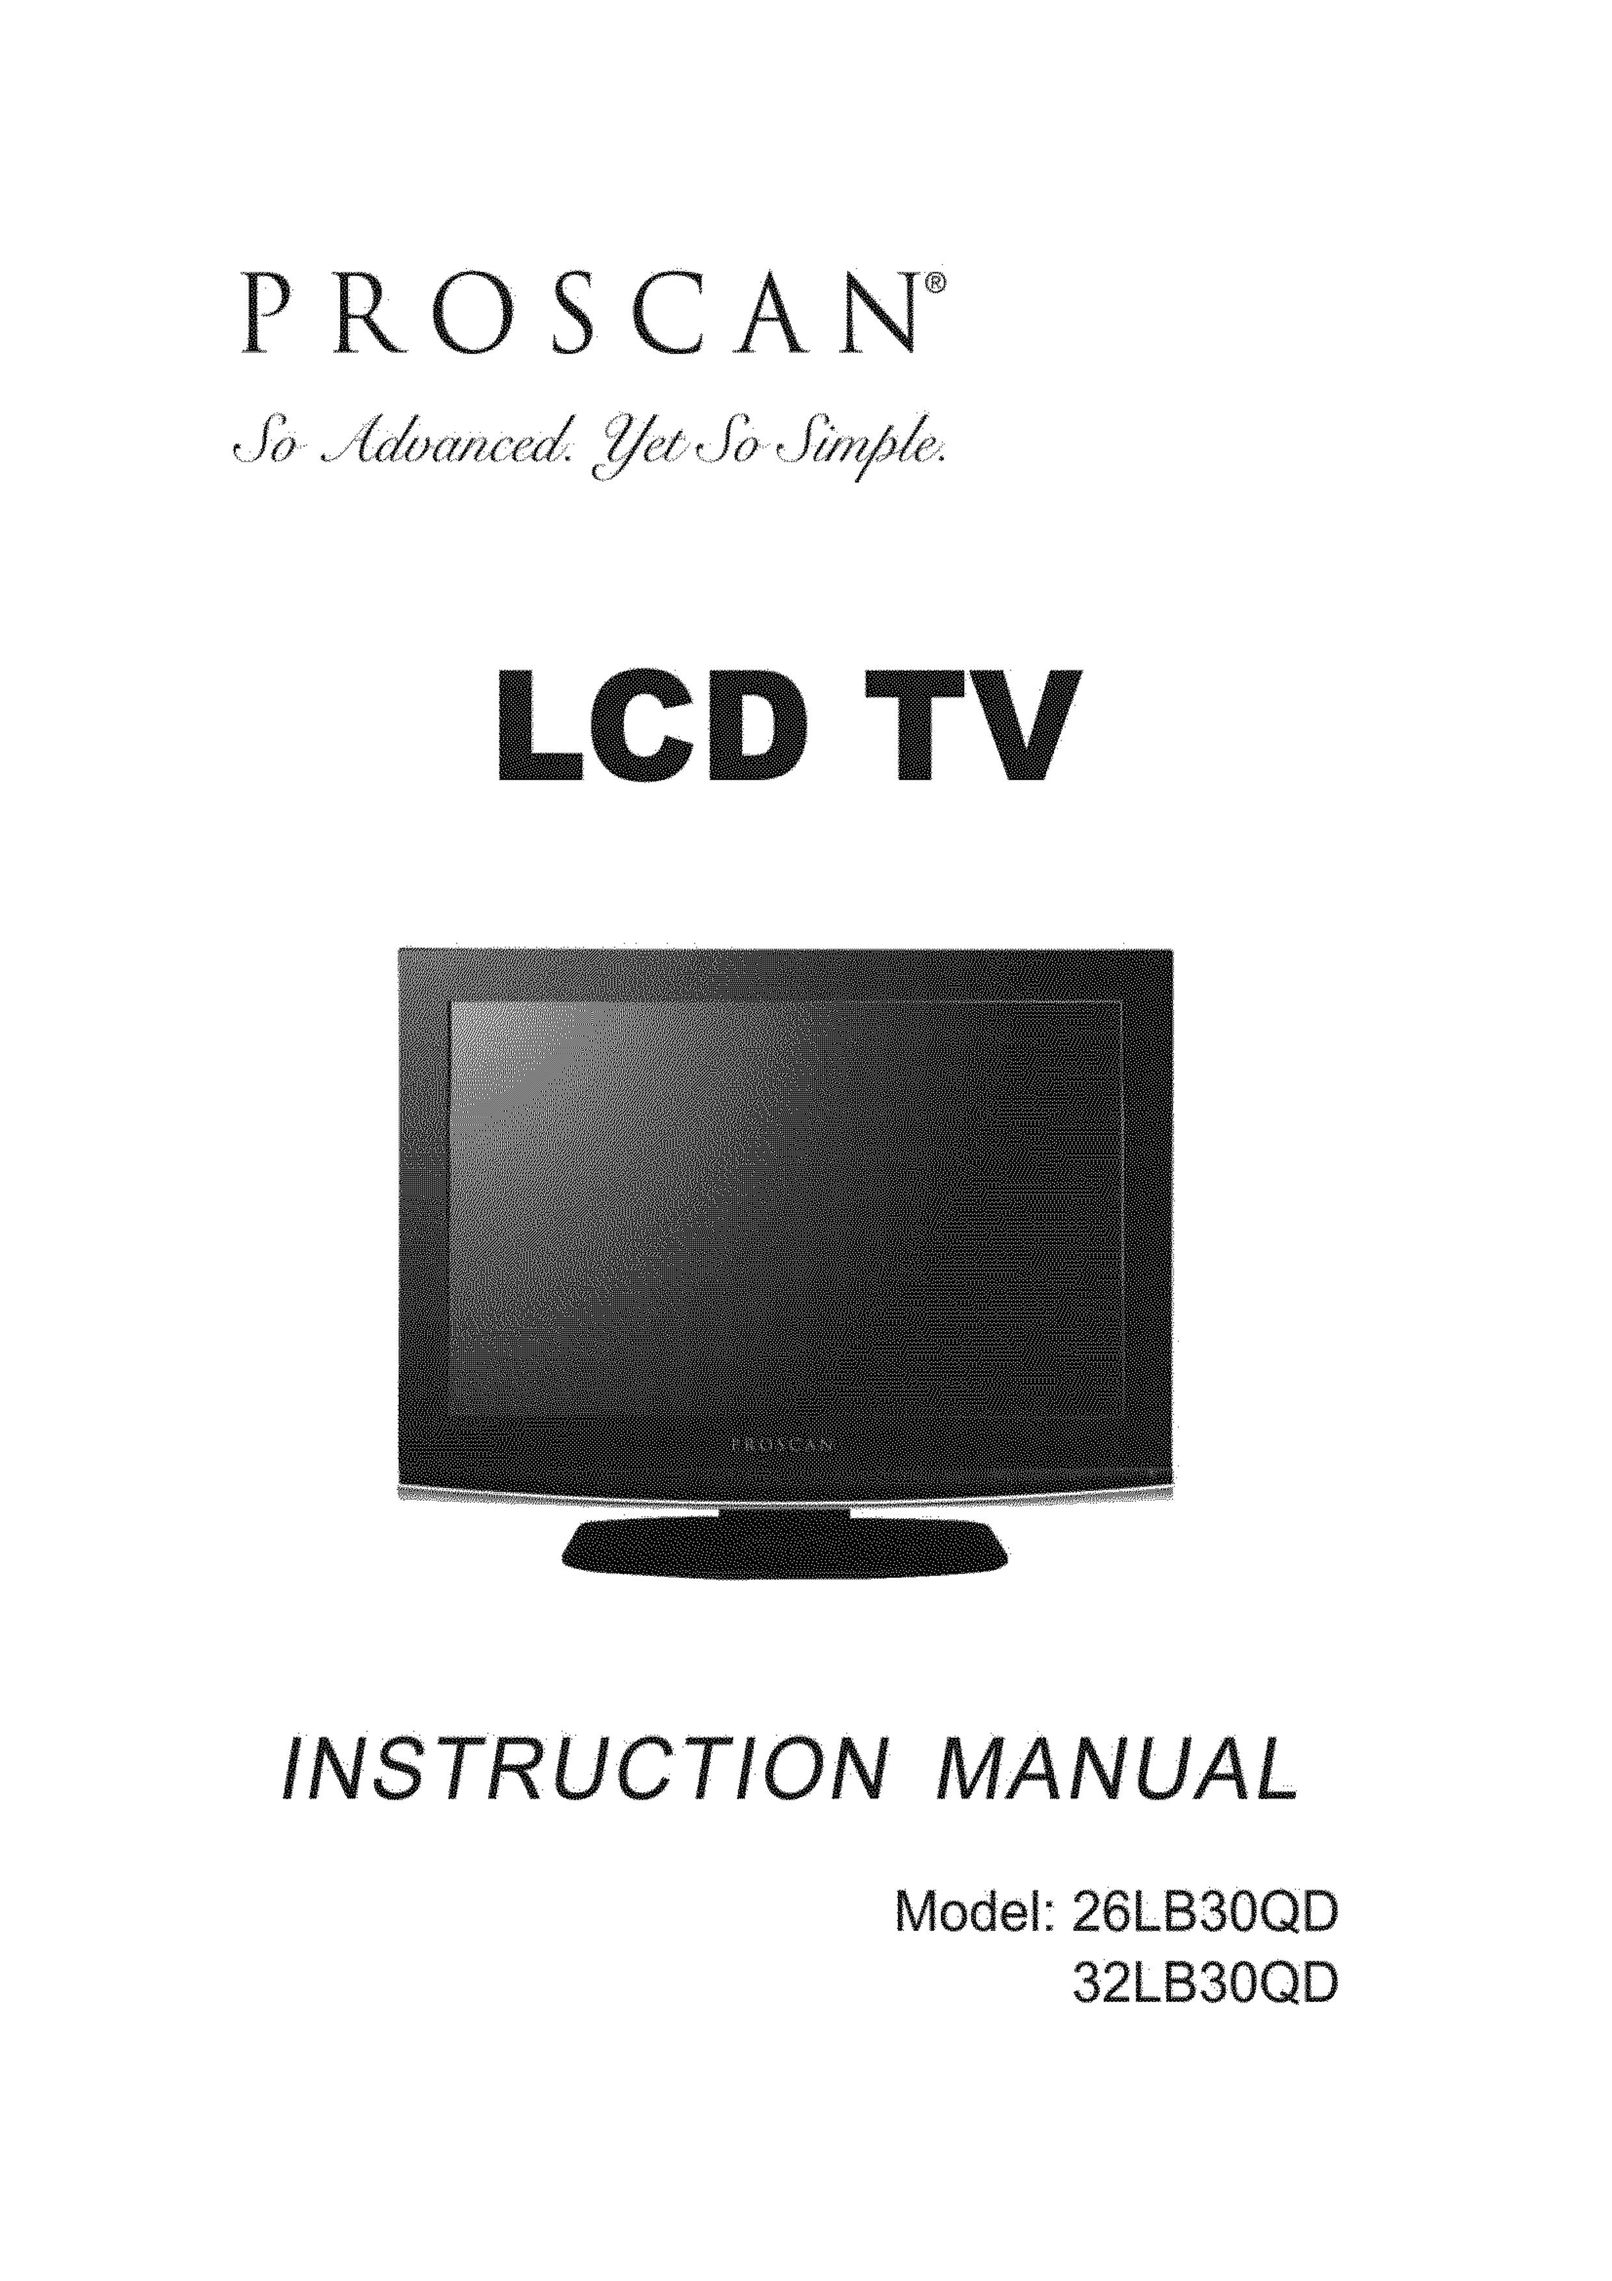 ProScan 32LB30QD Flat Panel Television User Manual